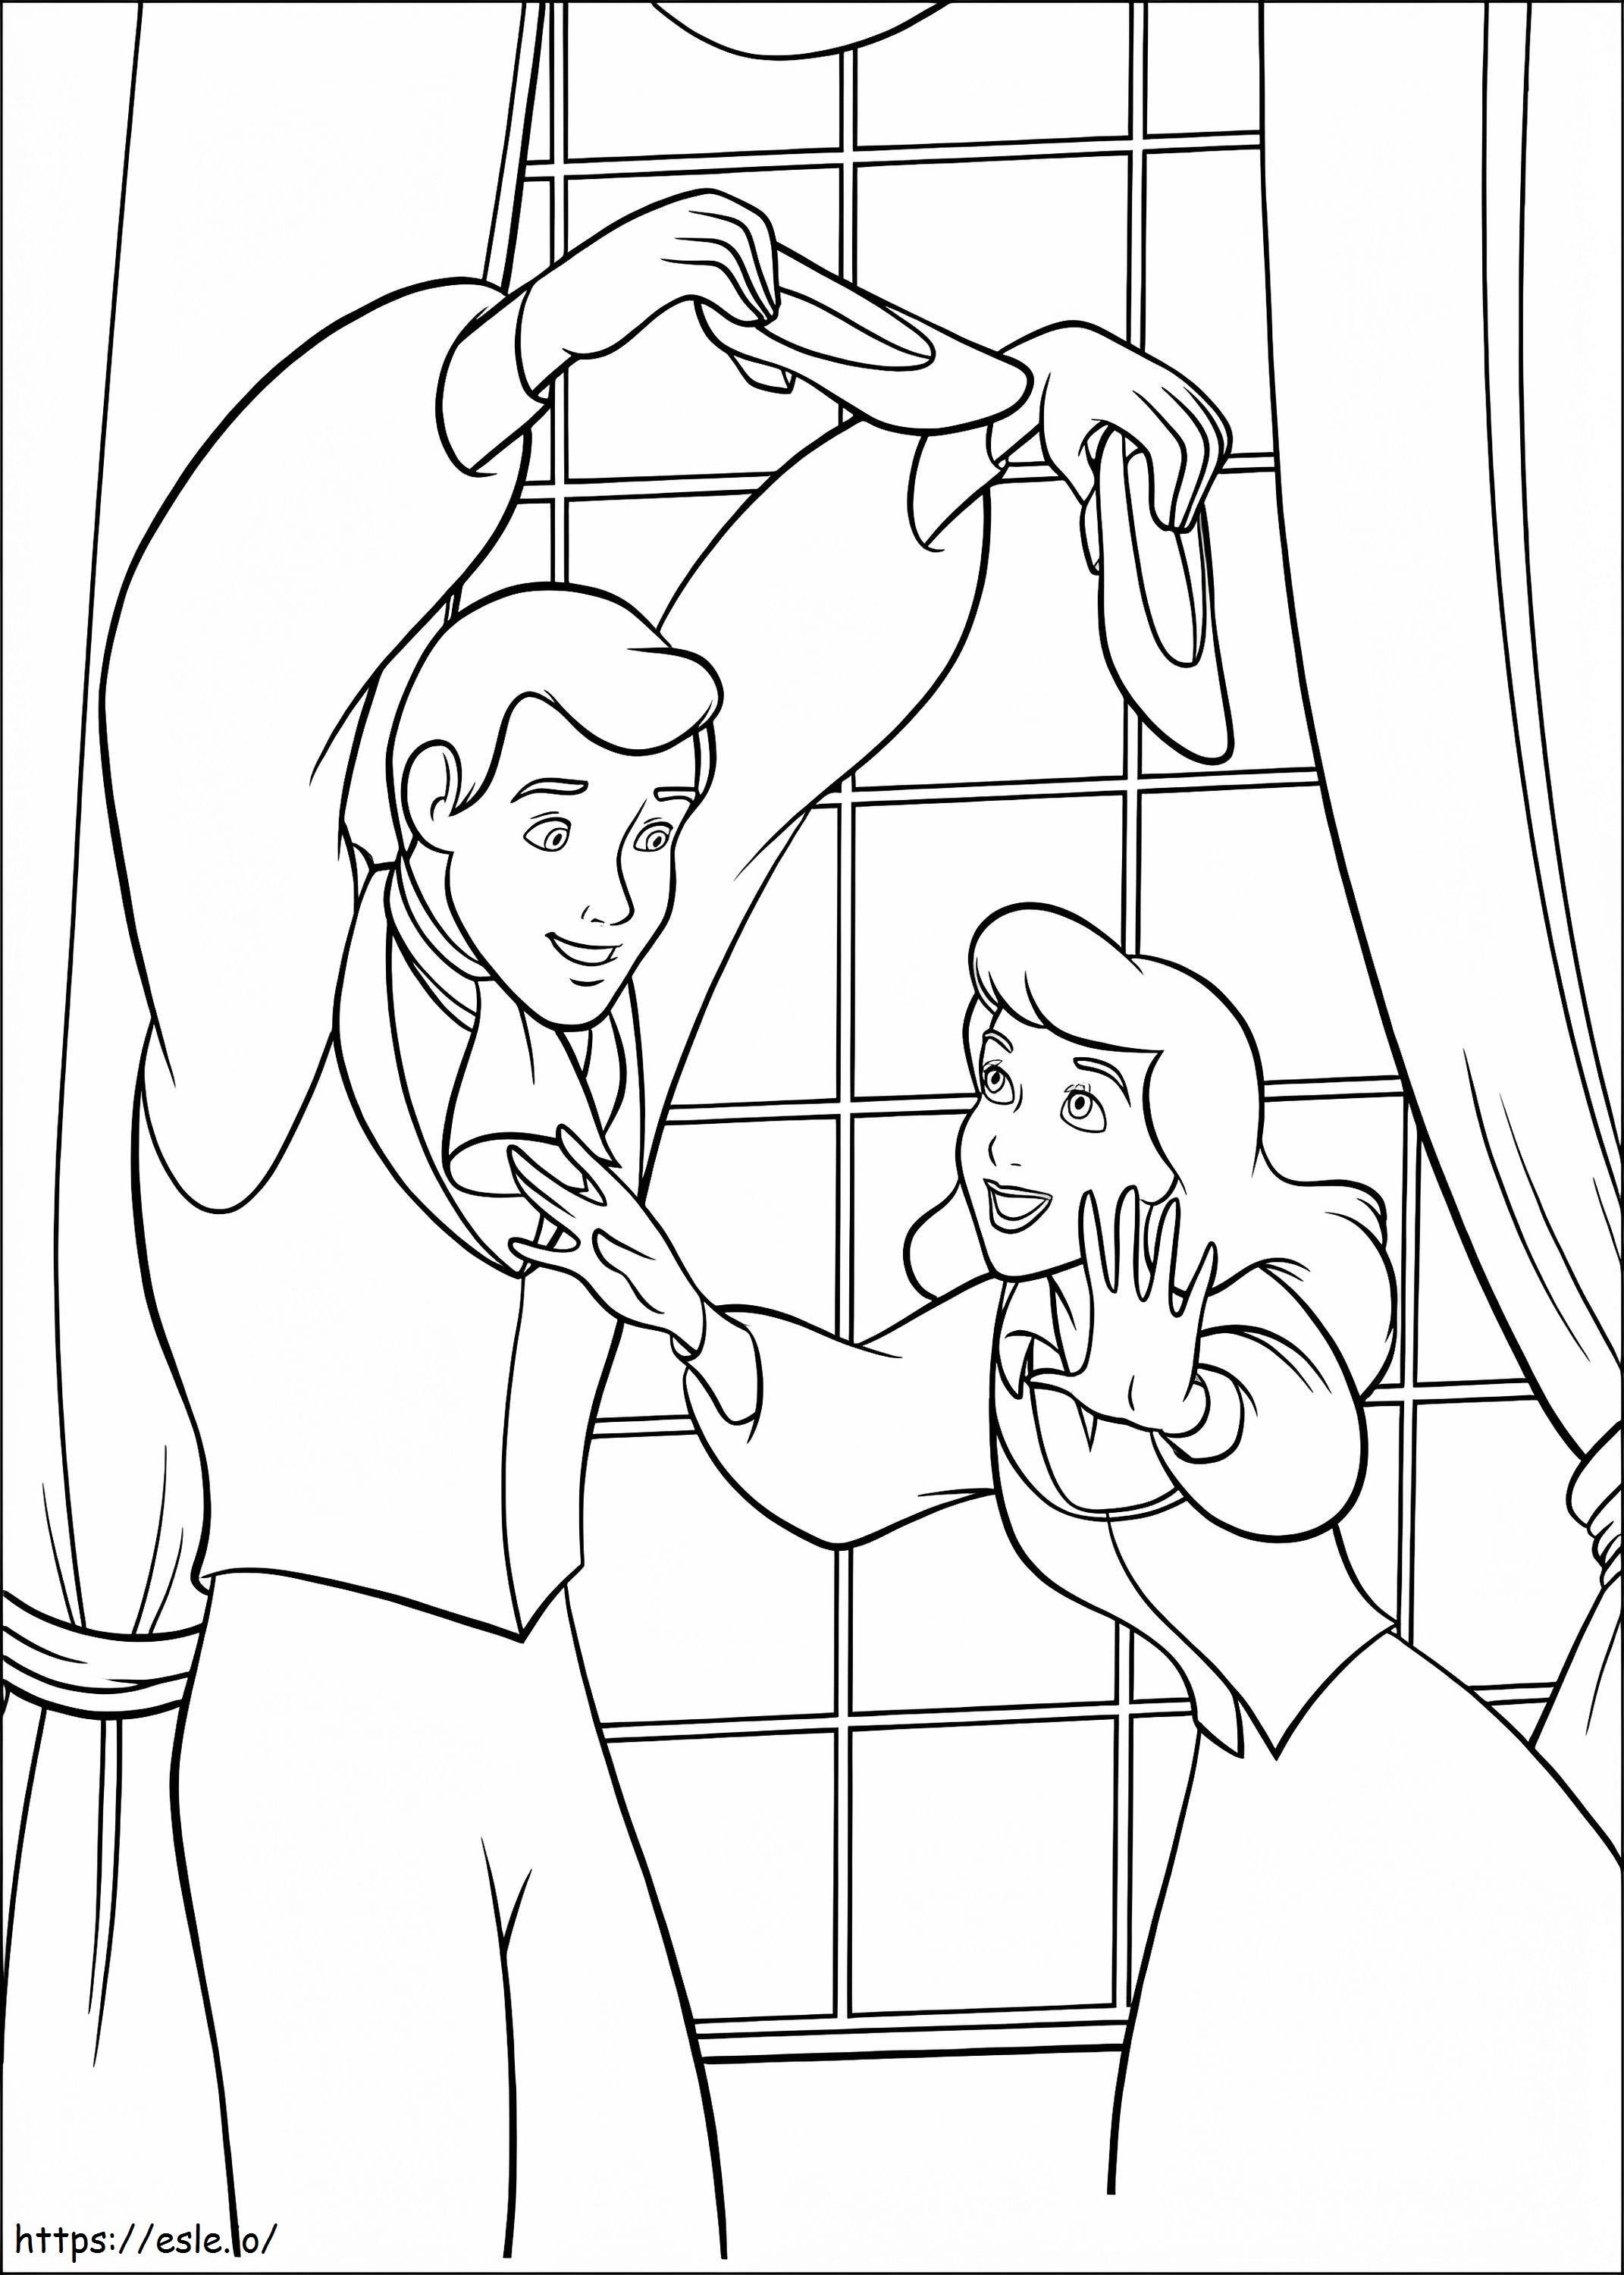 Prince With Cinderella coloring page